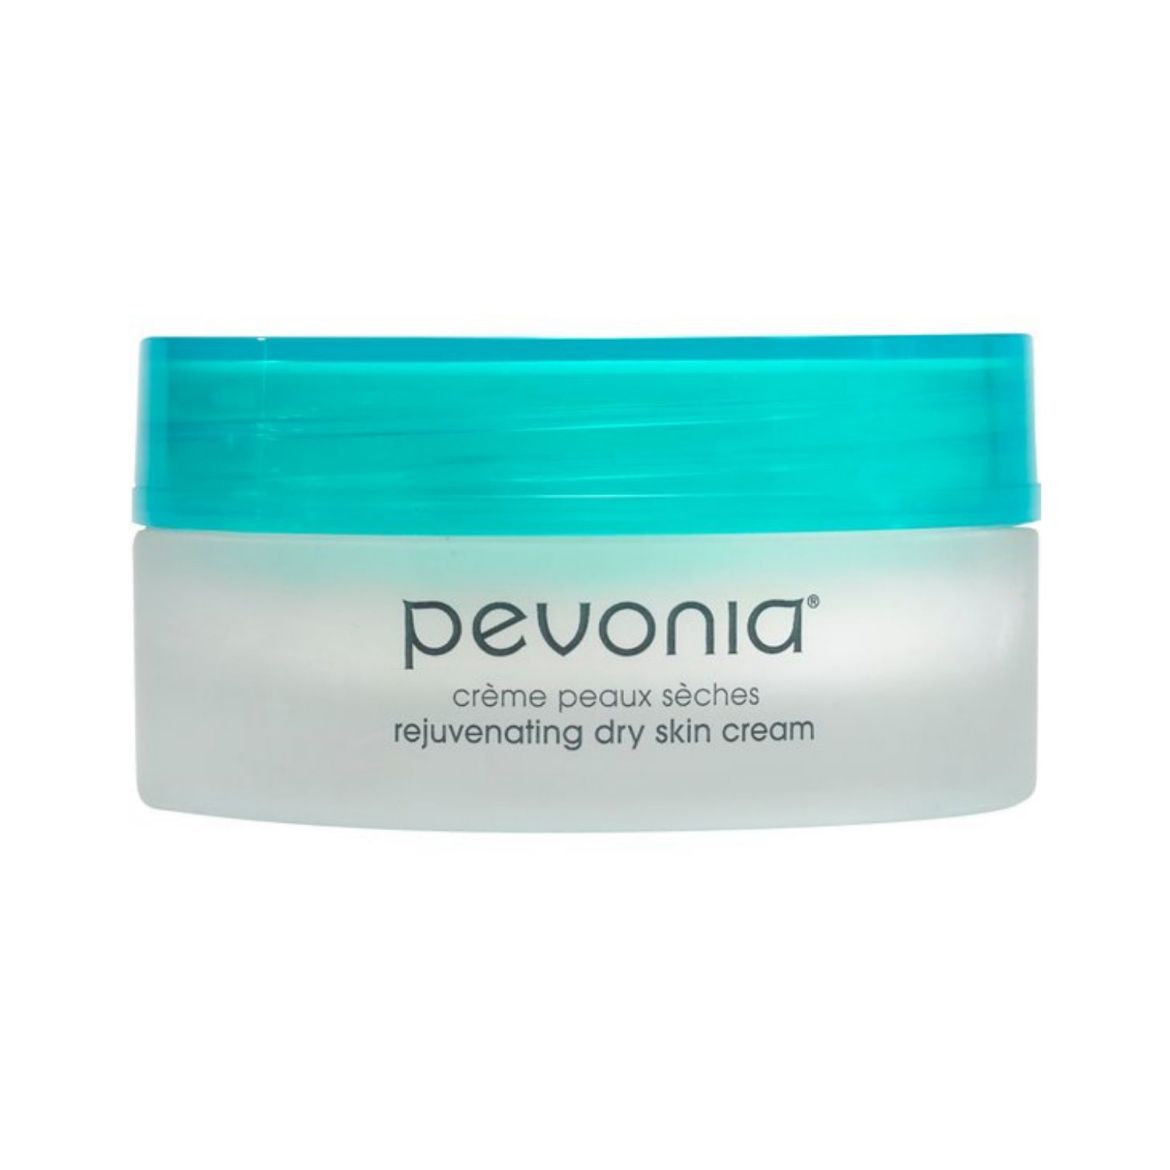 Immagine di Pevonia Rejuvenating Dry Skin Cream (50ml)